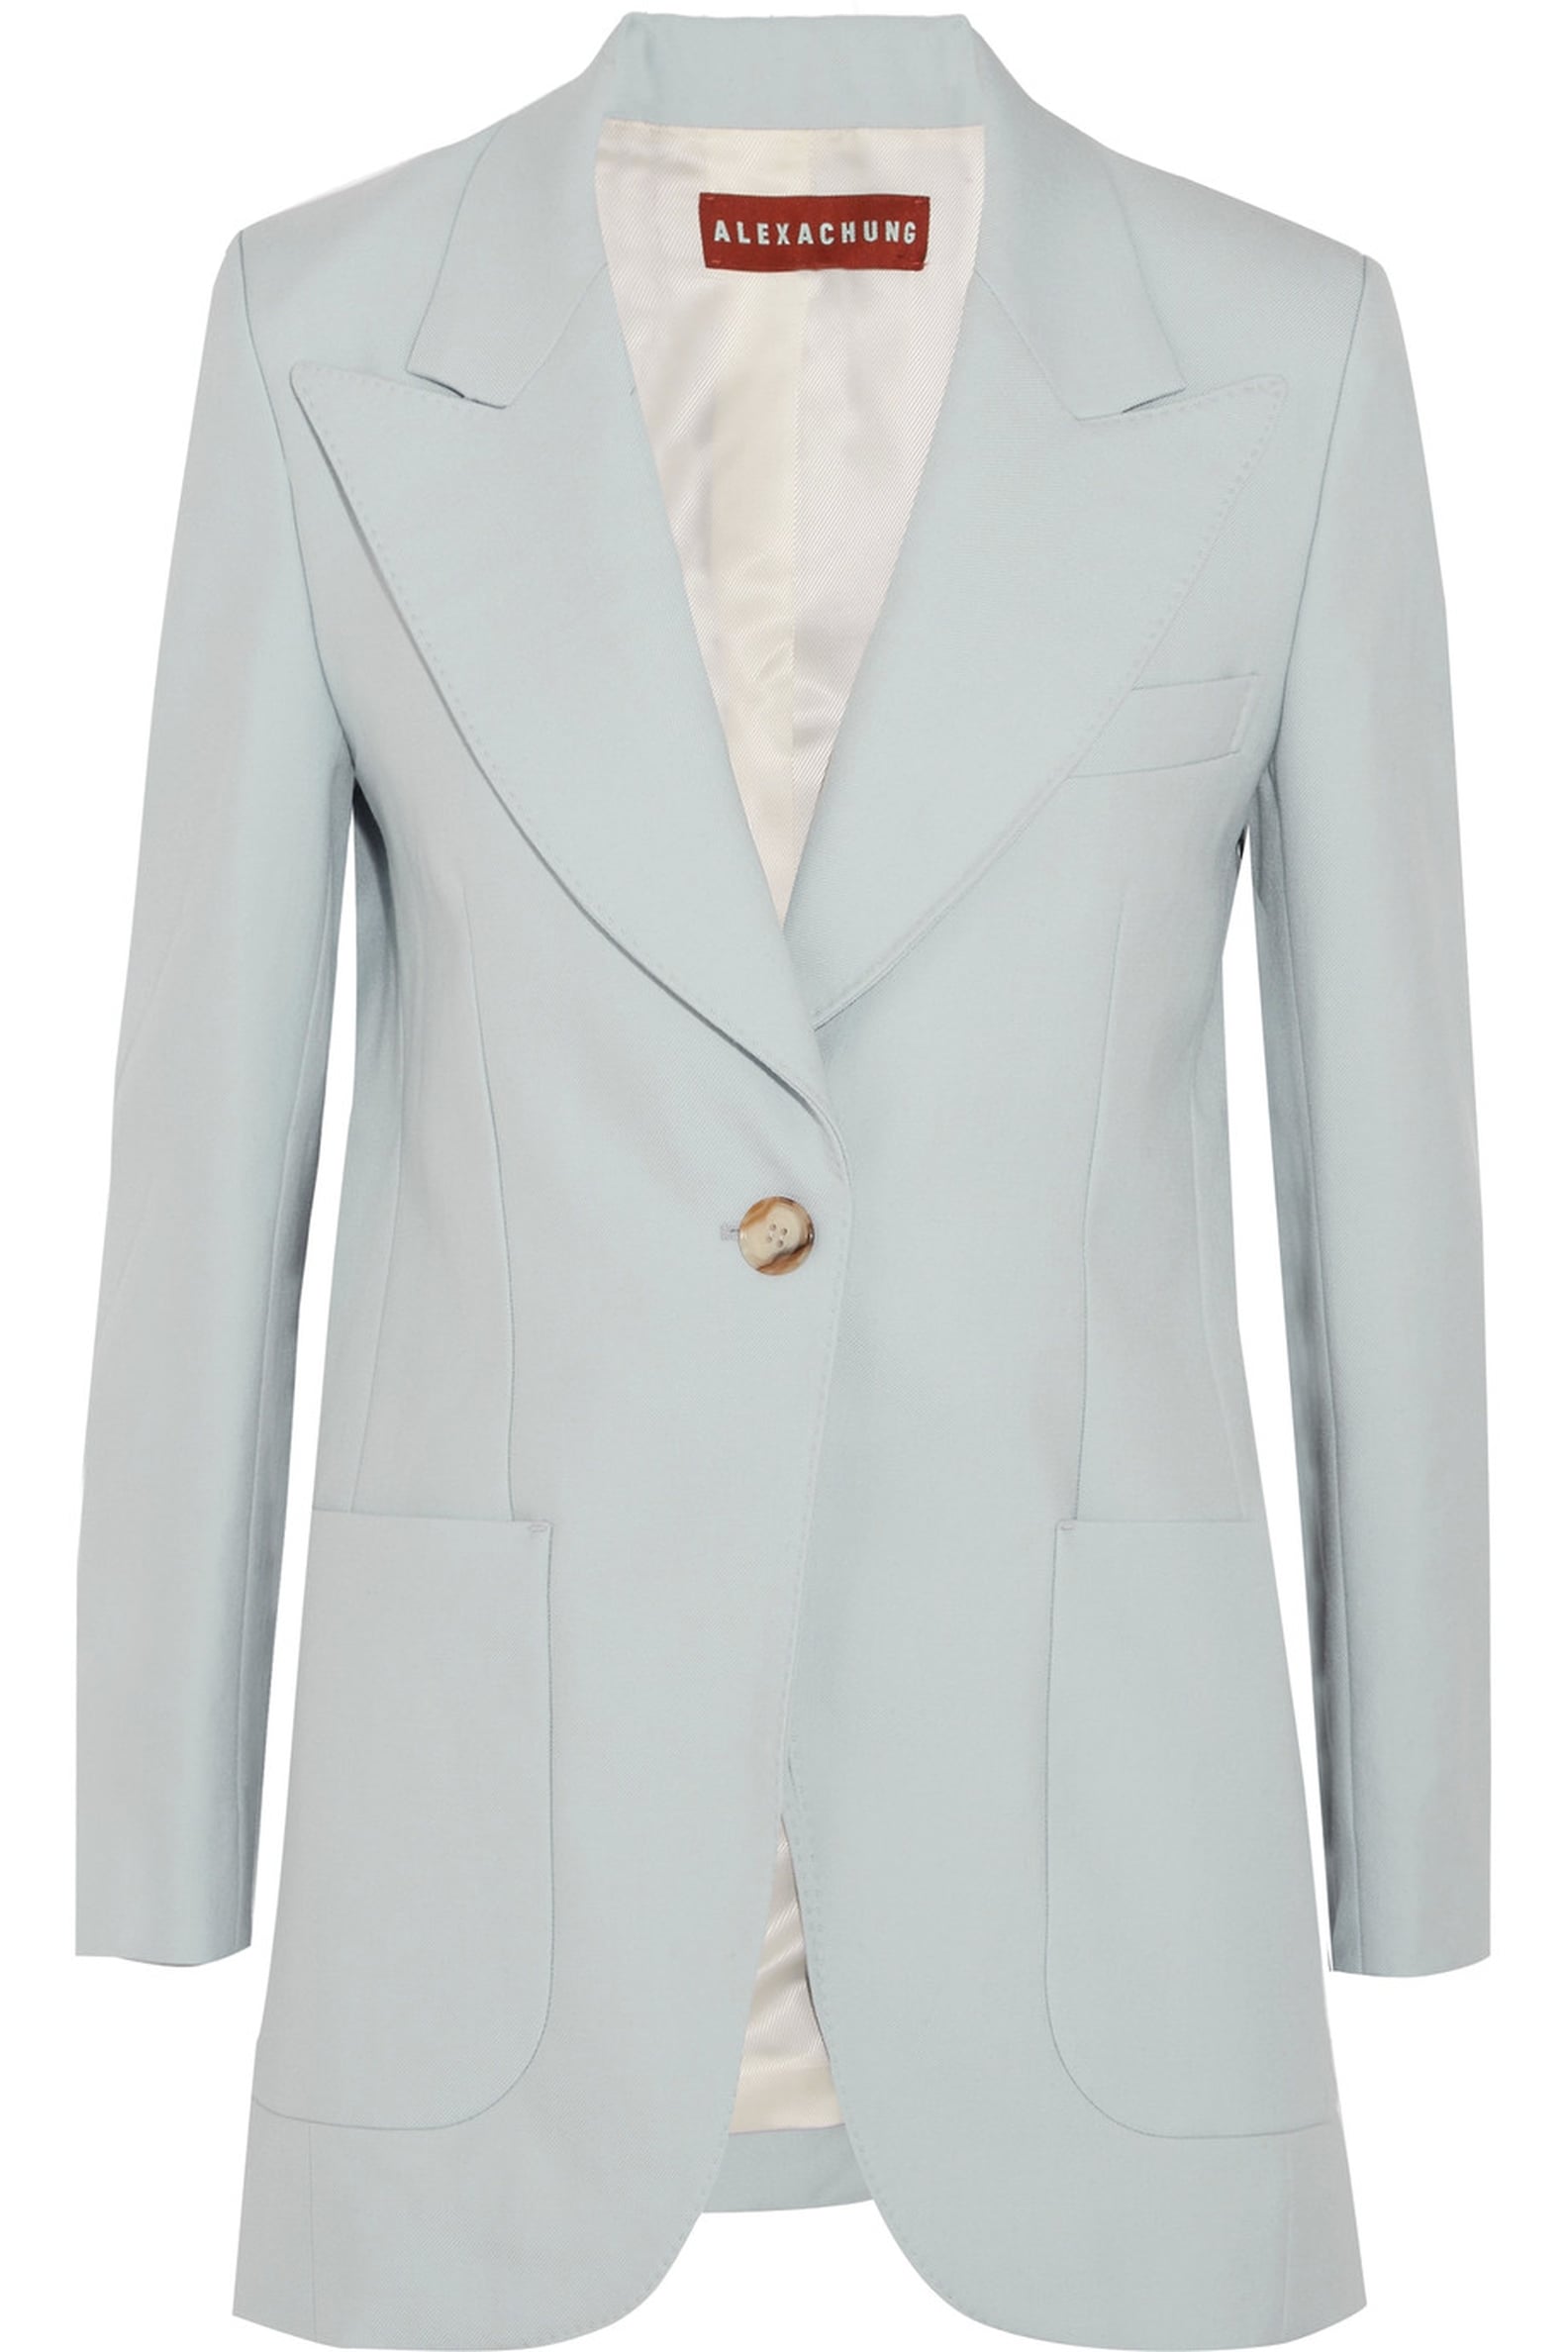 Gigi Hadid Blue Pamella Roland Suit | POPSUGAR Fashion